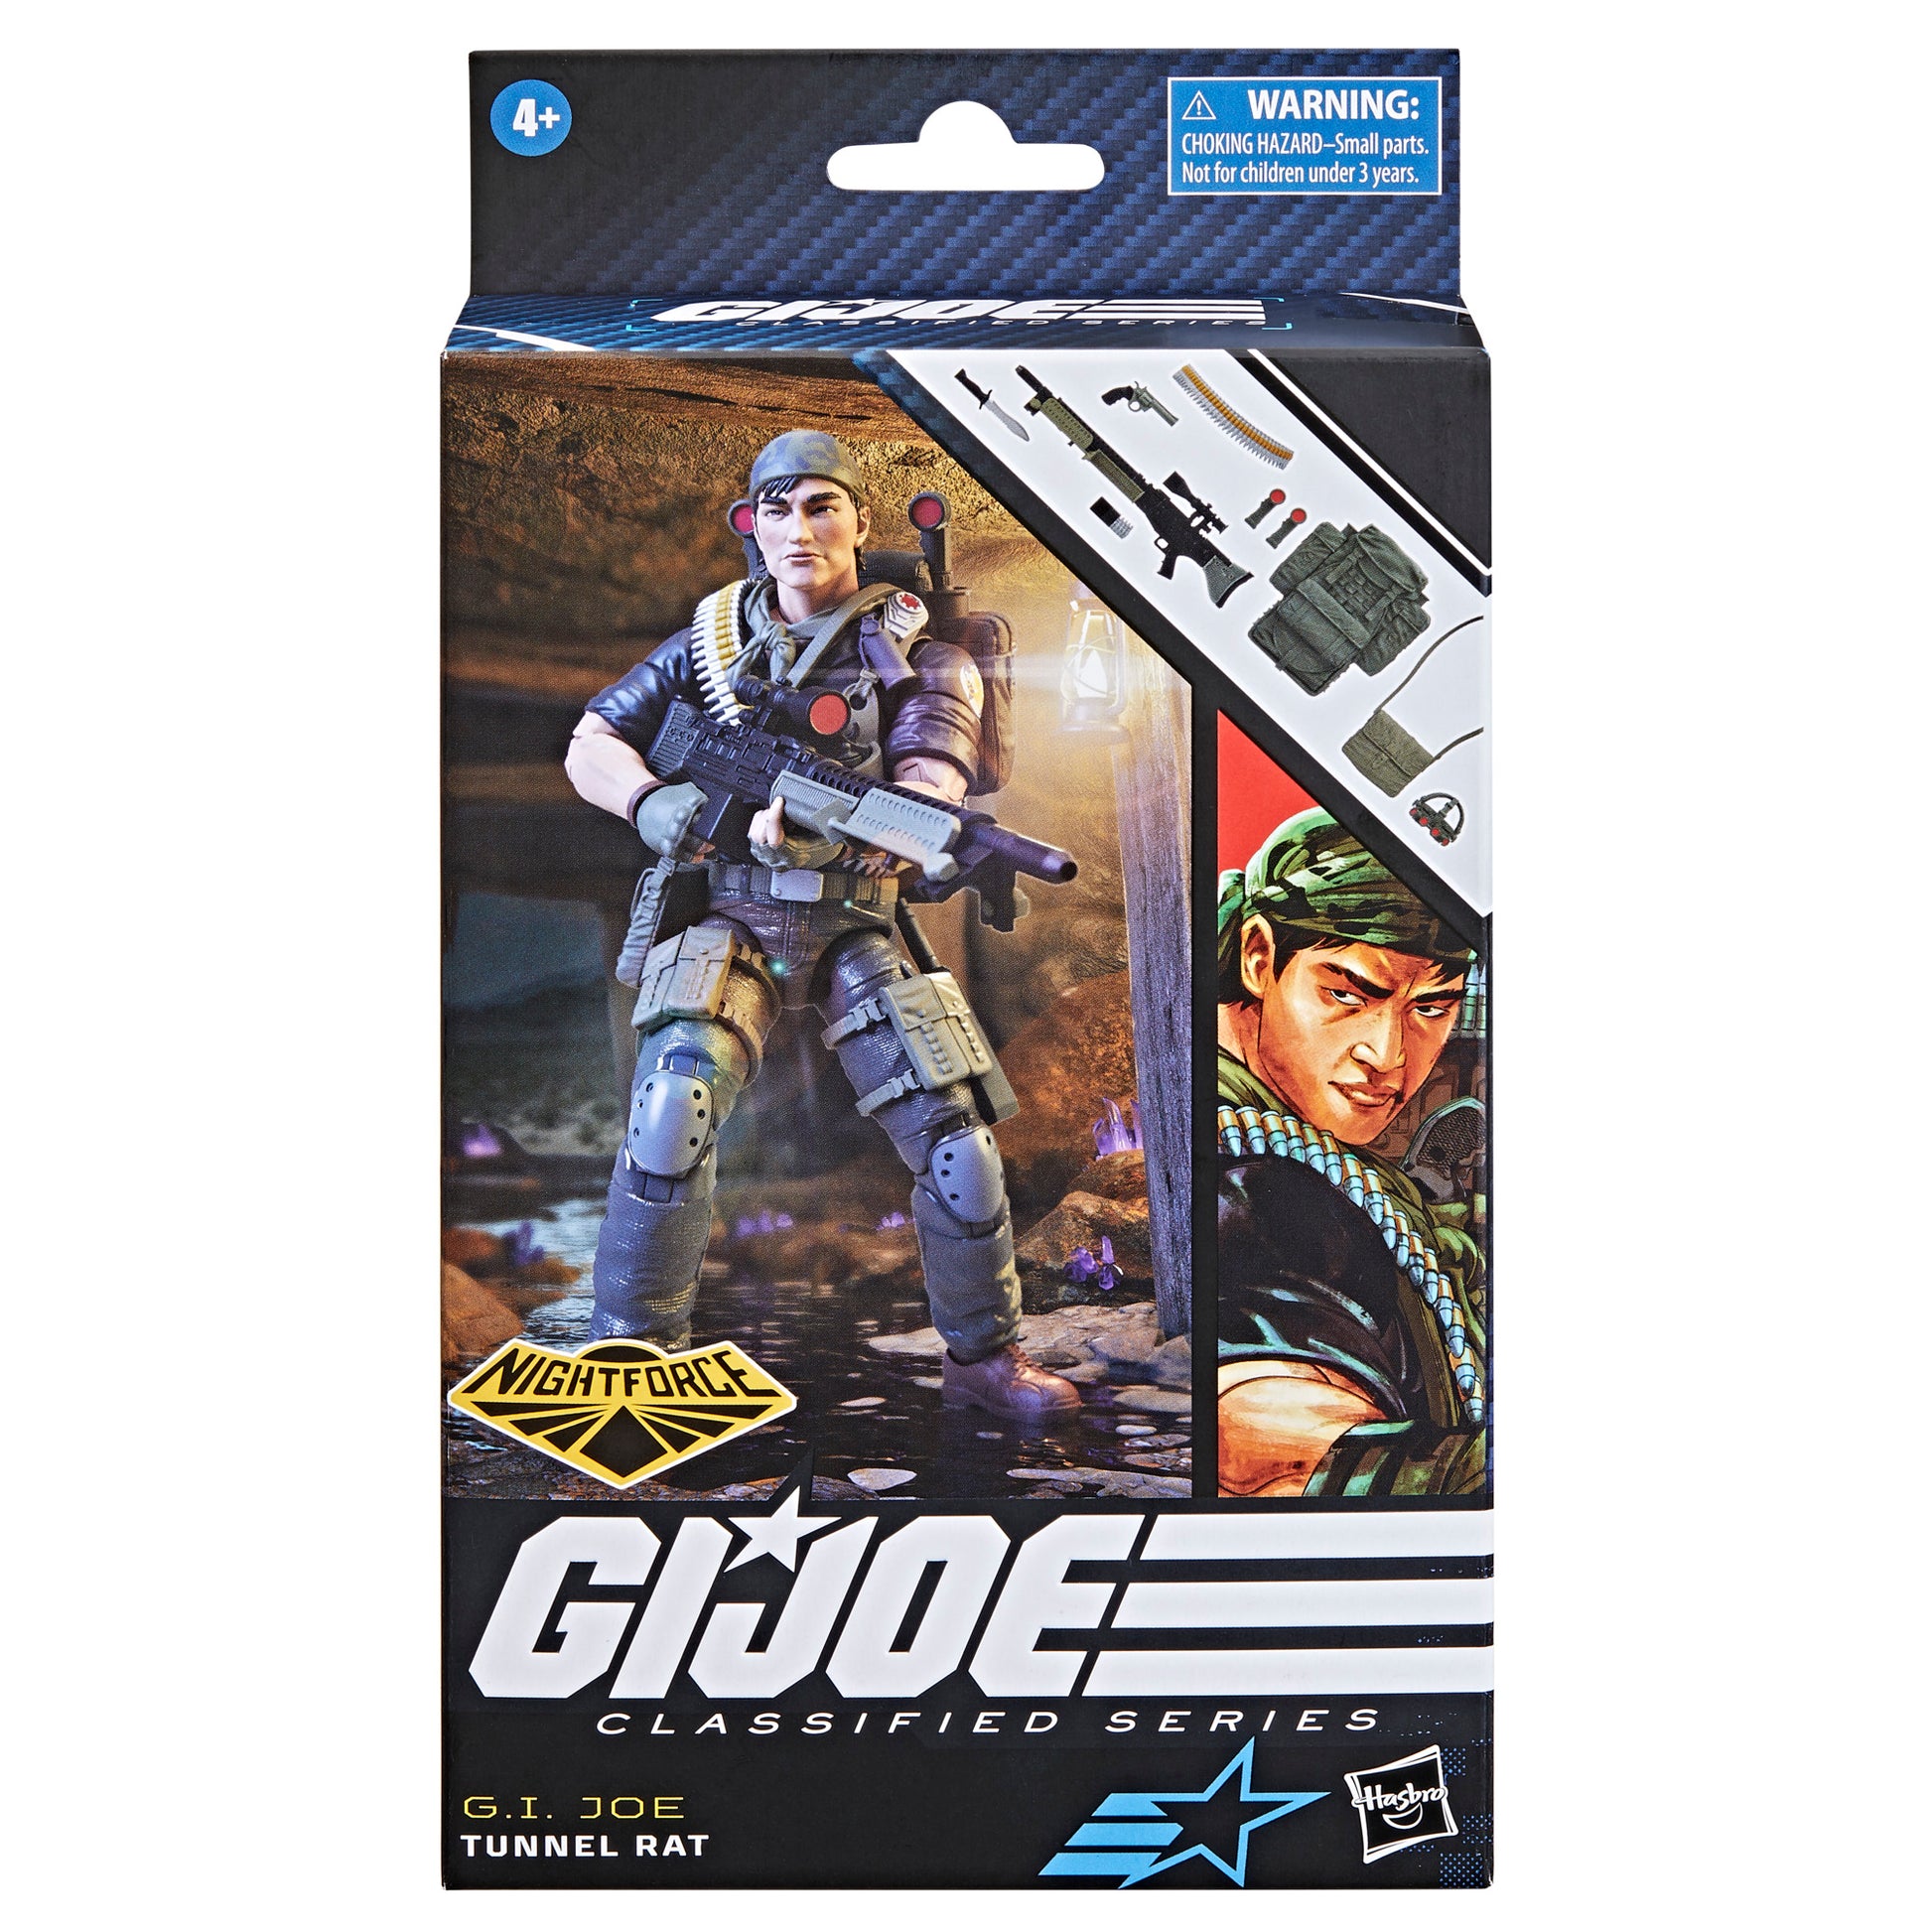 GI Joe Classified Series Tunnel Rat Exclusive Action Figure [Nightforce]